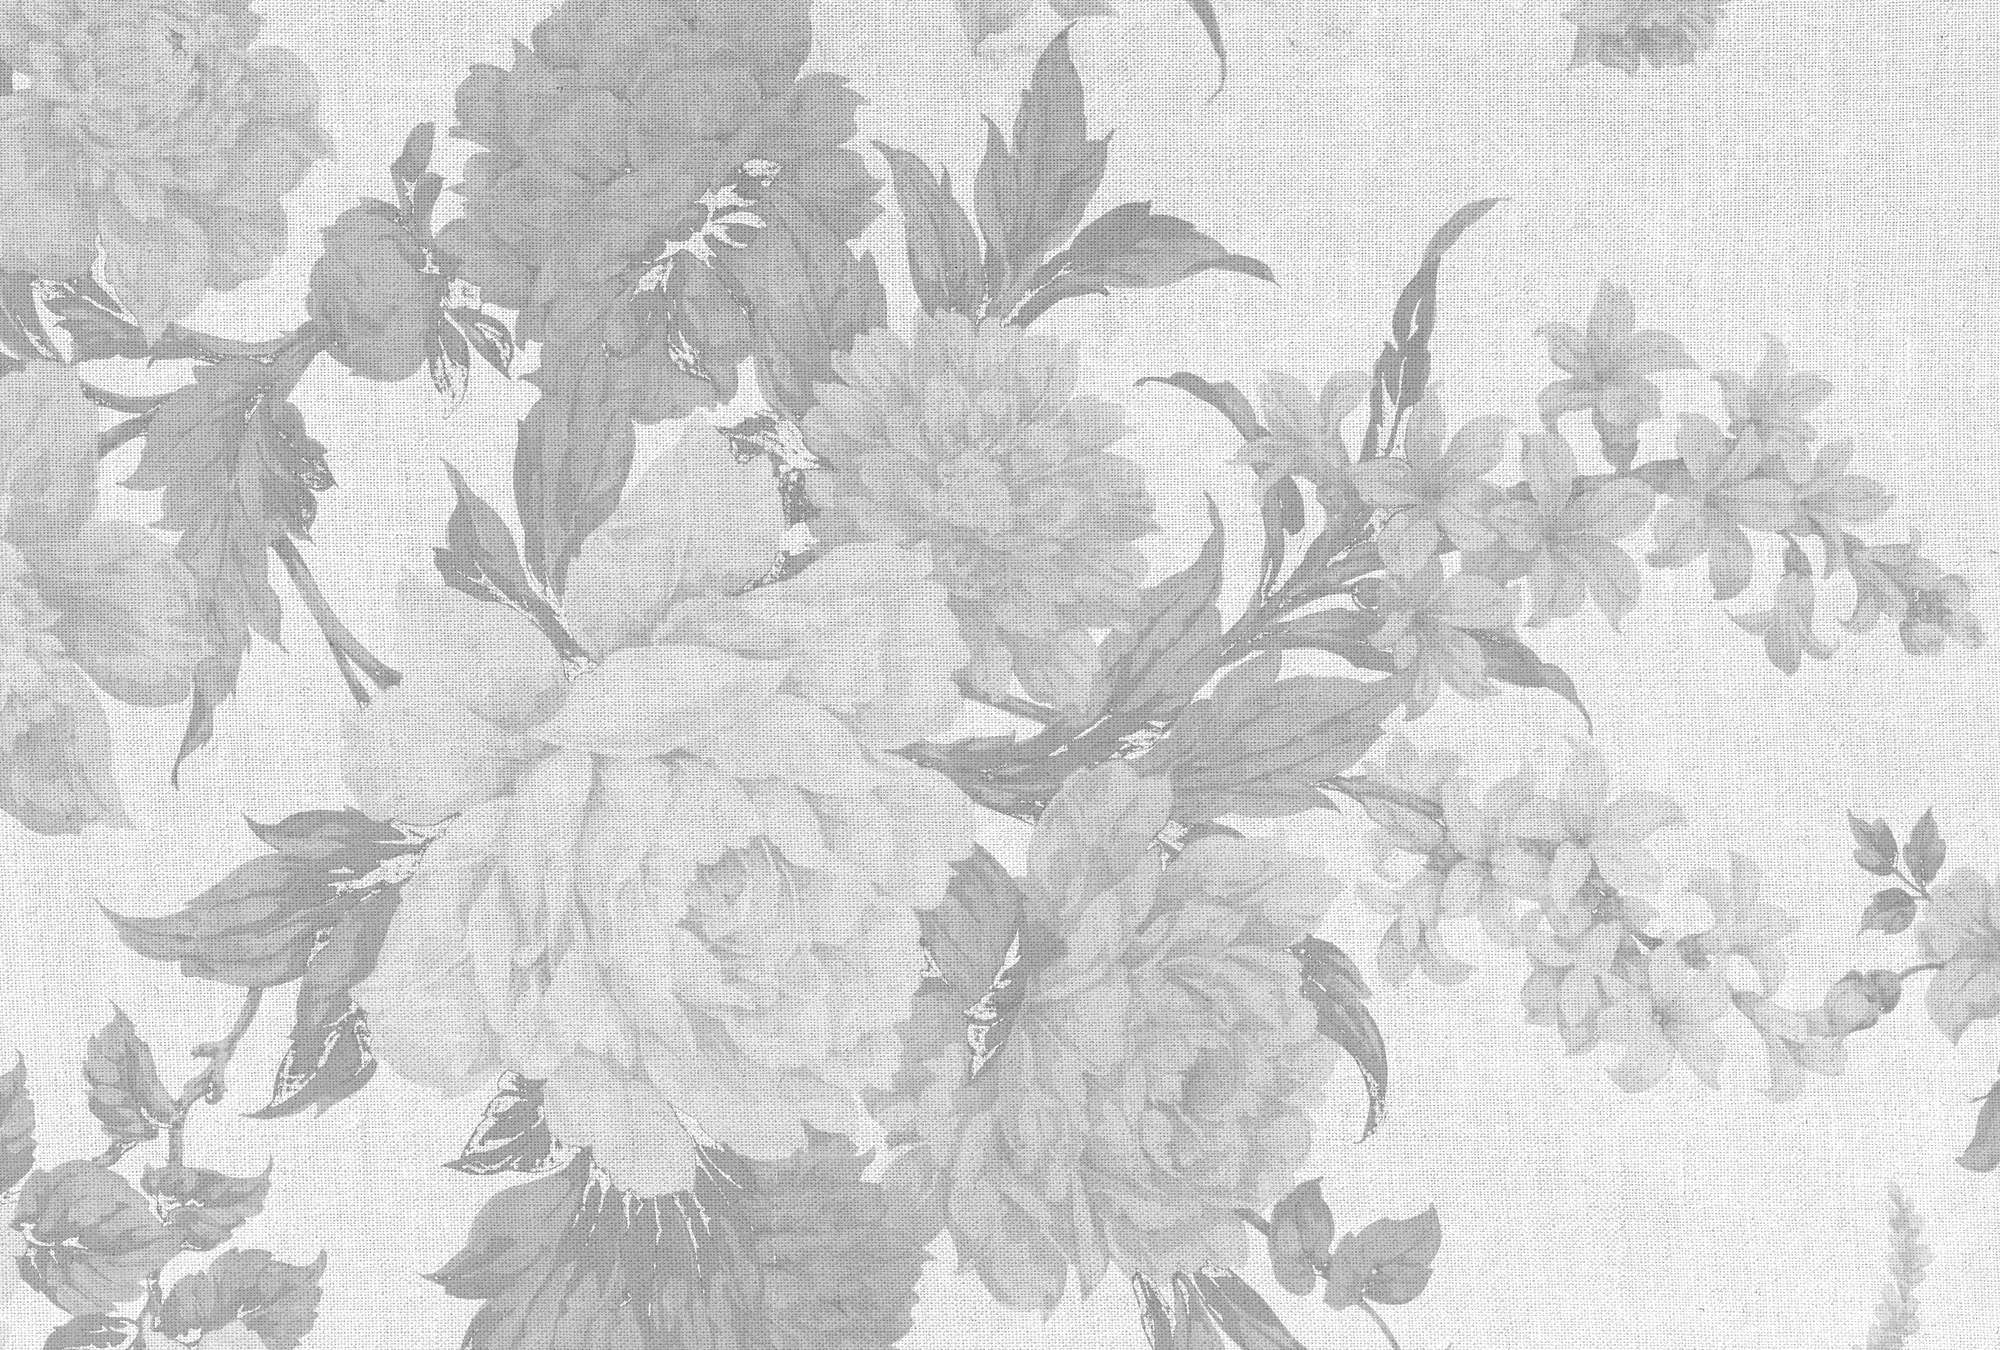             Photo wallpaper with roses motif in textile optics - grey, white
        